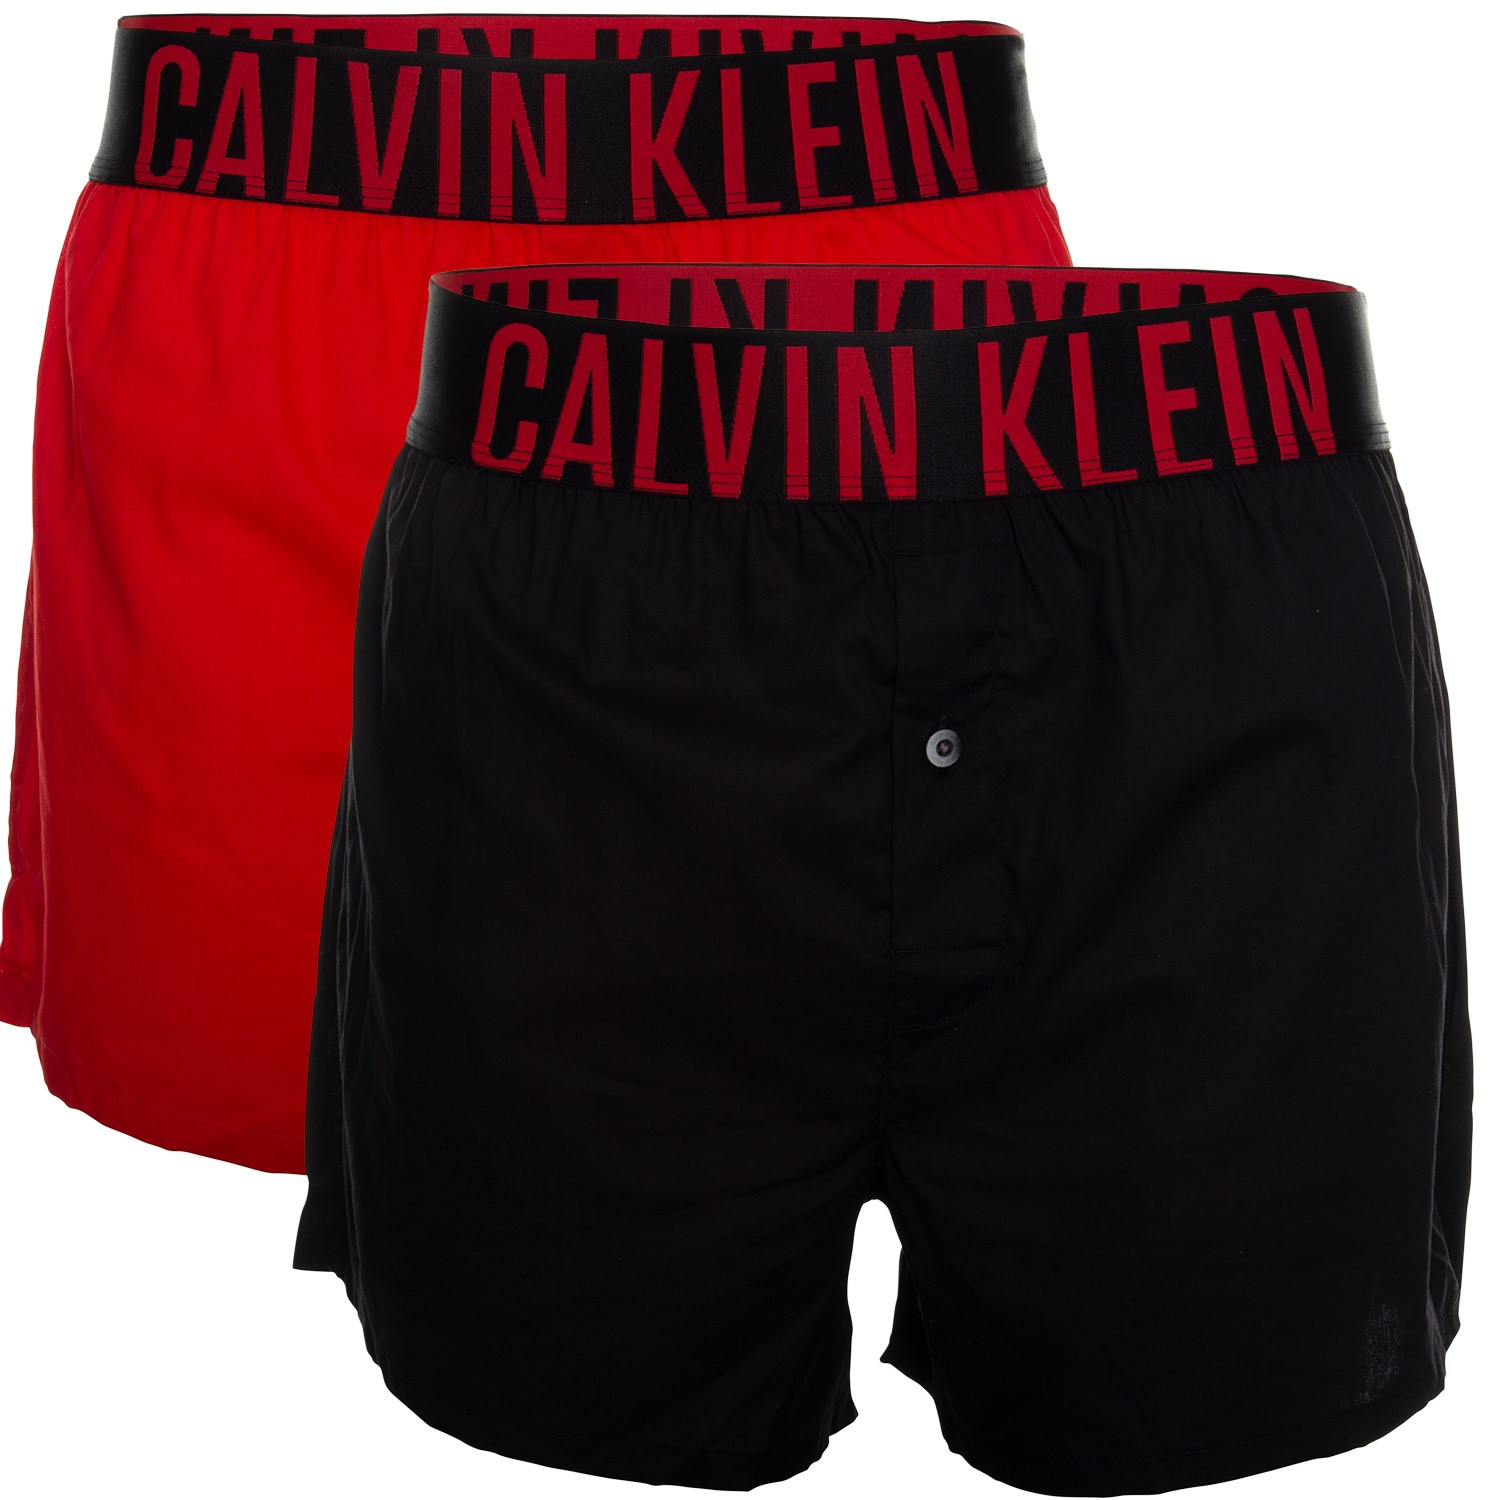 Calvin Klein Intense Power Slim Fit Boxer Shorts